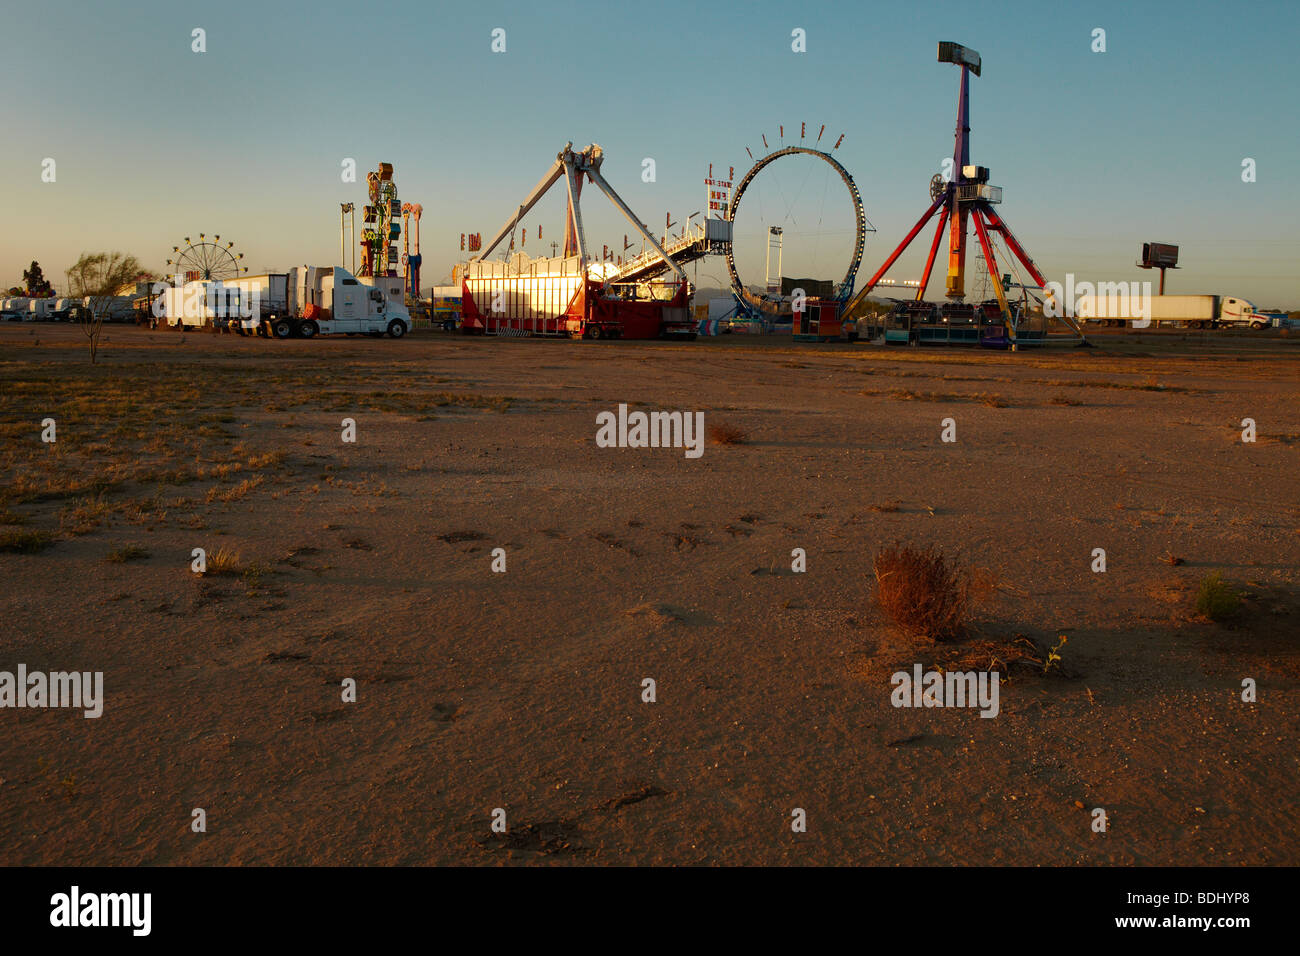 Fairground in a desert at sunset Stock Photo